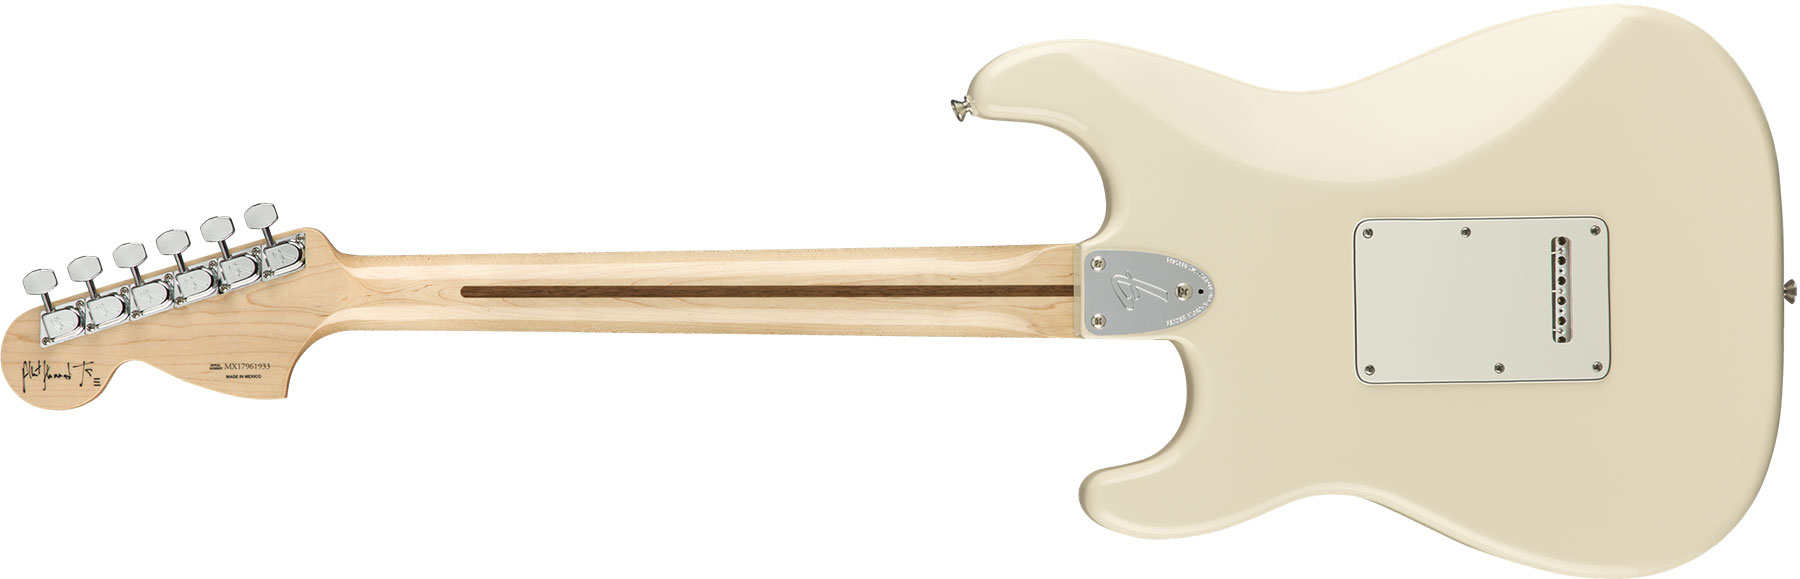 Fender Albert Hammond Strat Mex Signature 3s Trem Rw - Olympic White - Str shape electric guitar - Variation 1